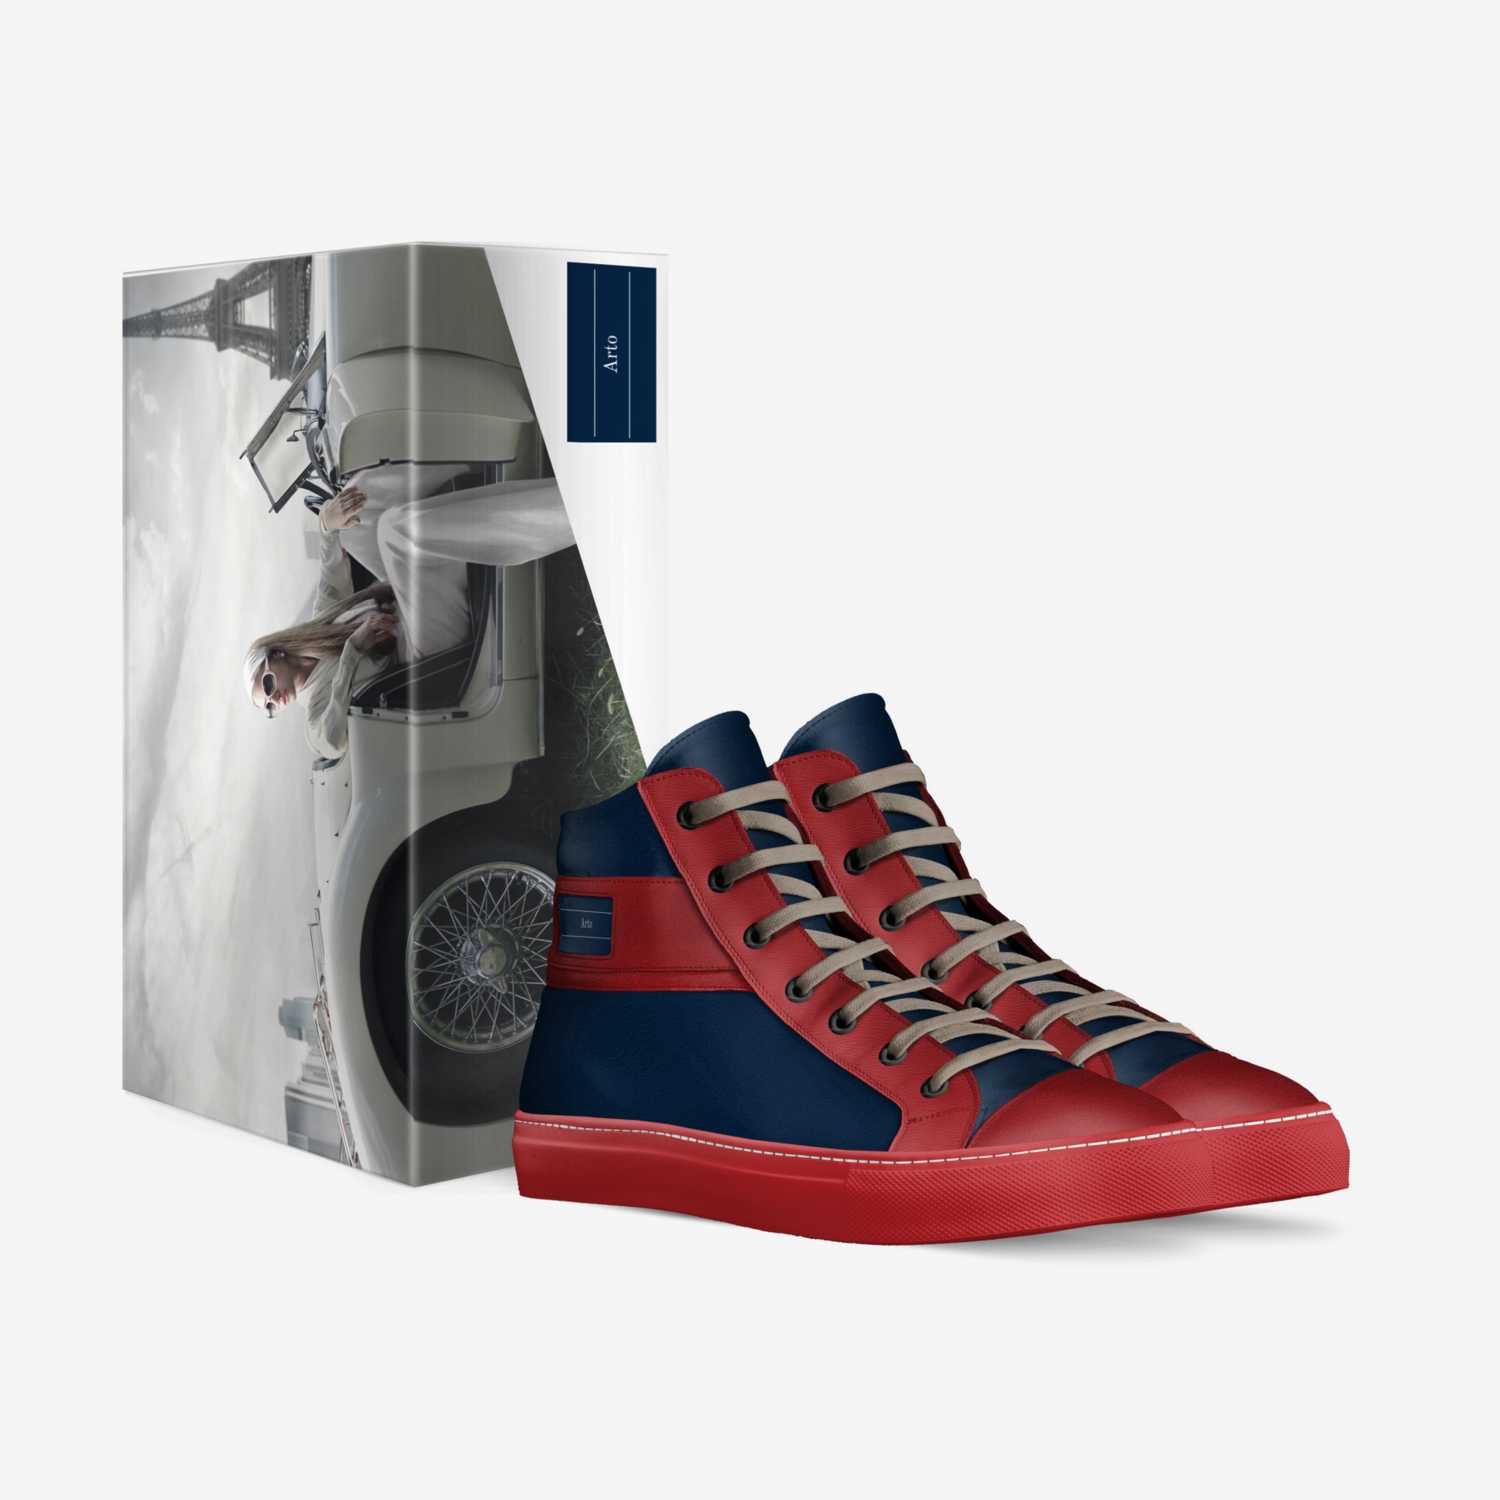 Arto custom made in Italy shoes by Fortunate Mahlangu | Box view